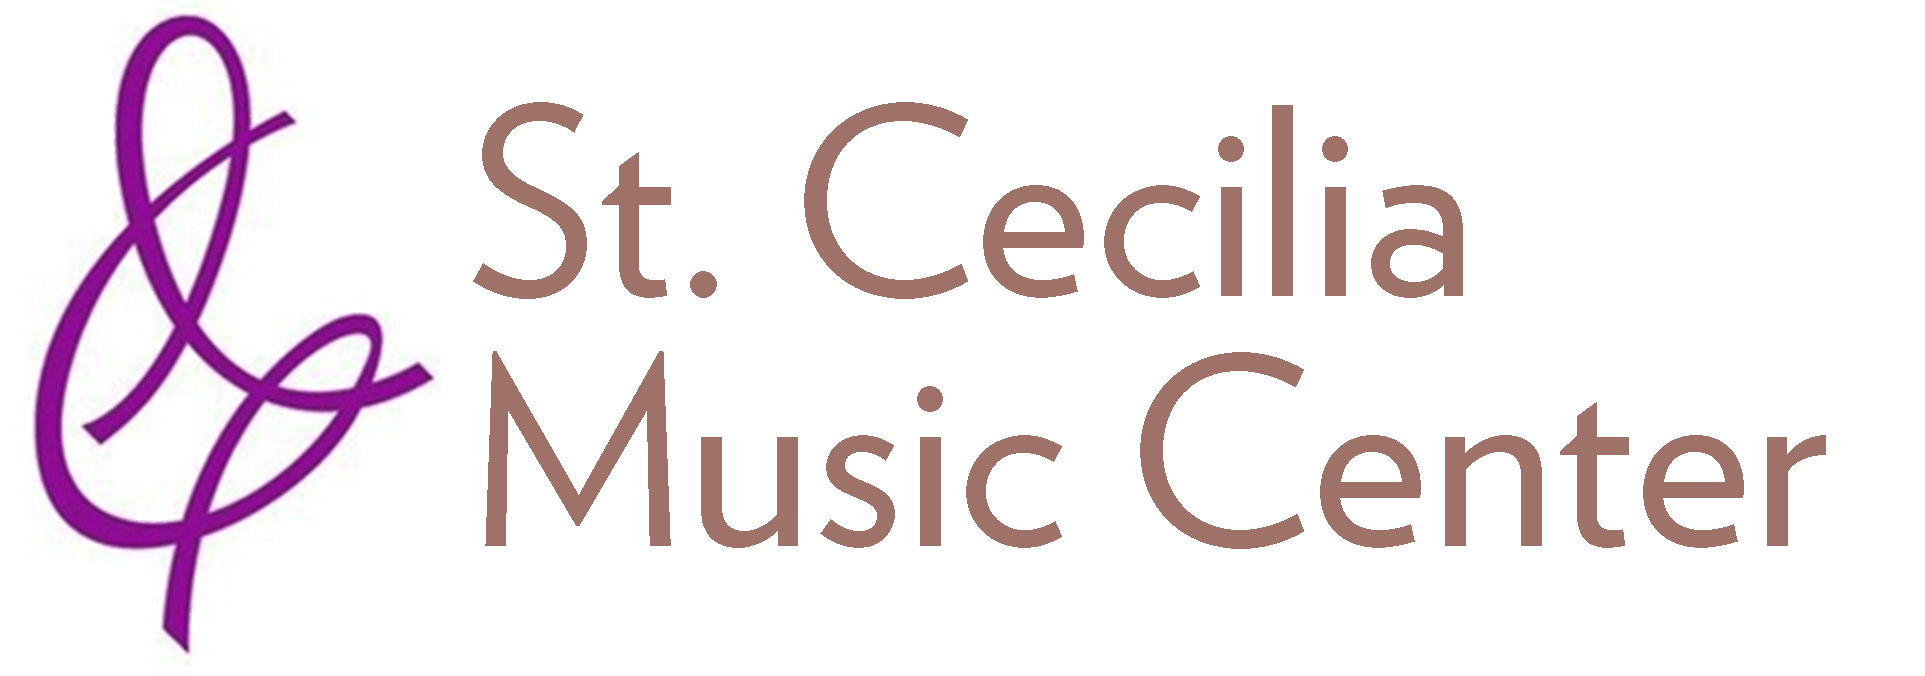 Scmc Logo - Header Name and Logo – St. Cecilia Music Center